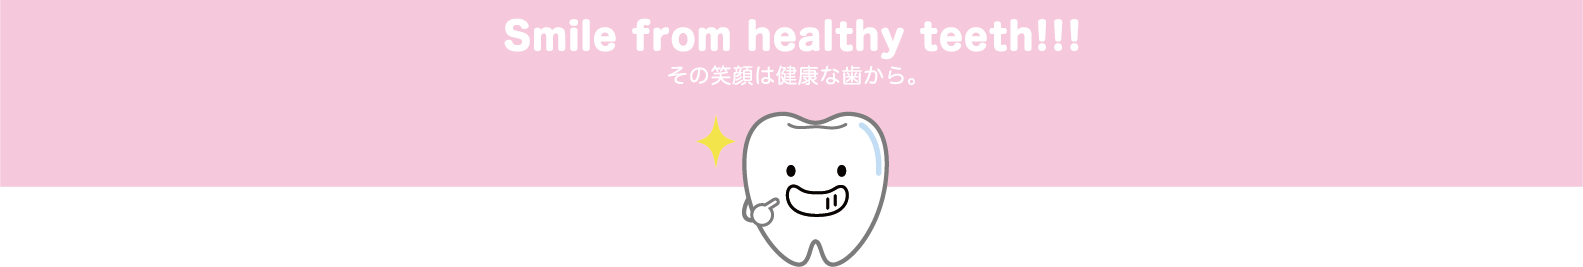 Smile from healthy teeth!!!その笑顔は健康な歯から